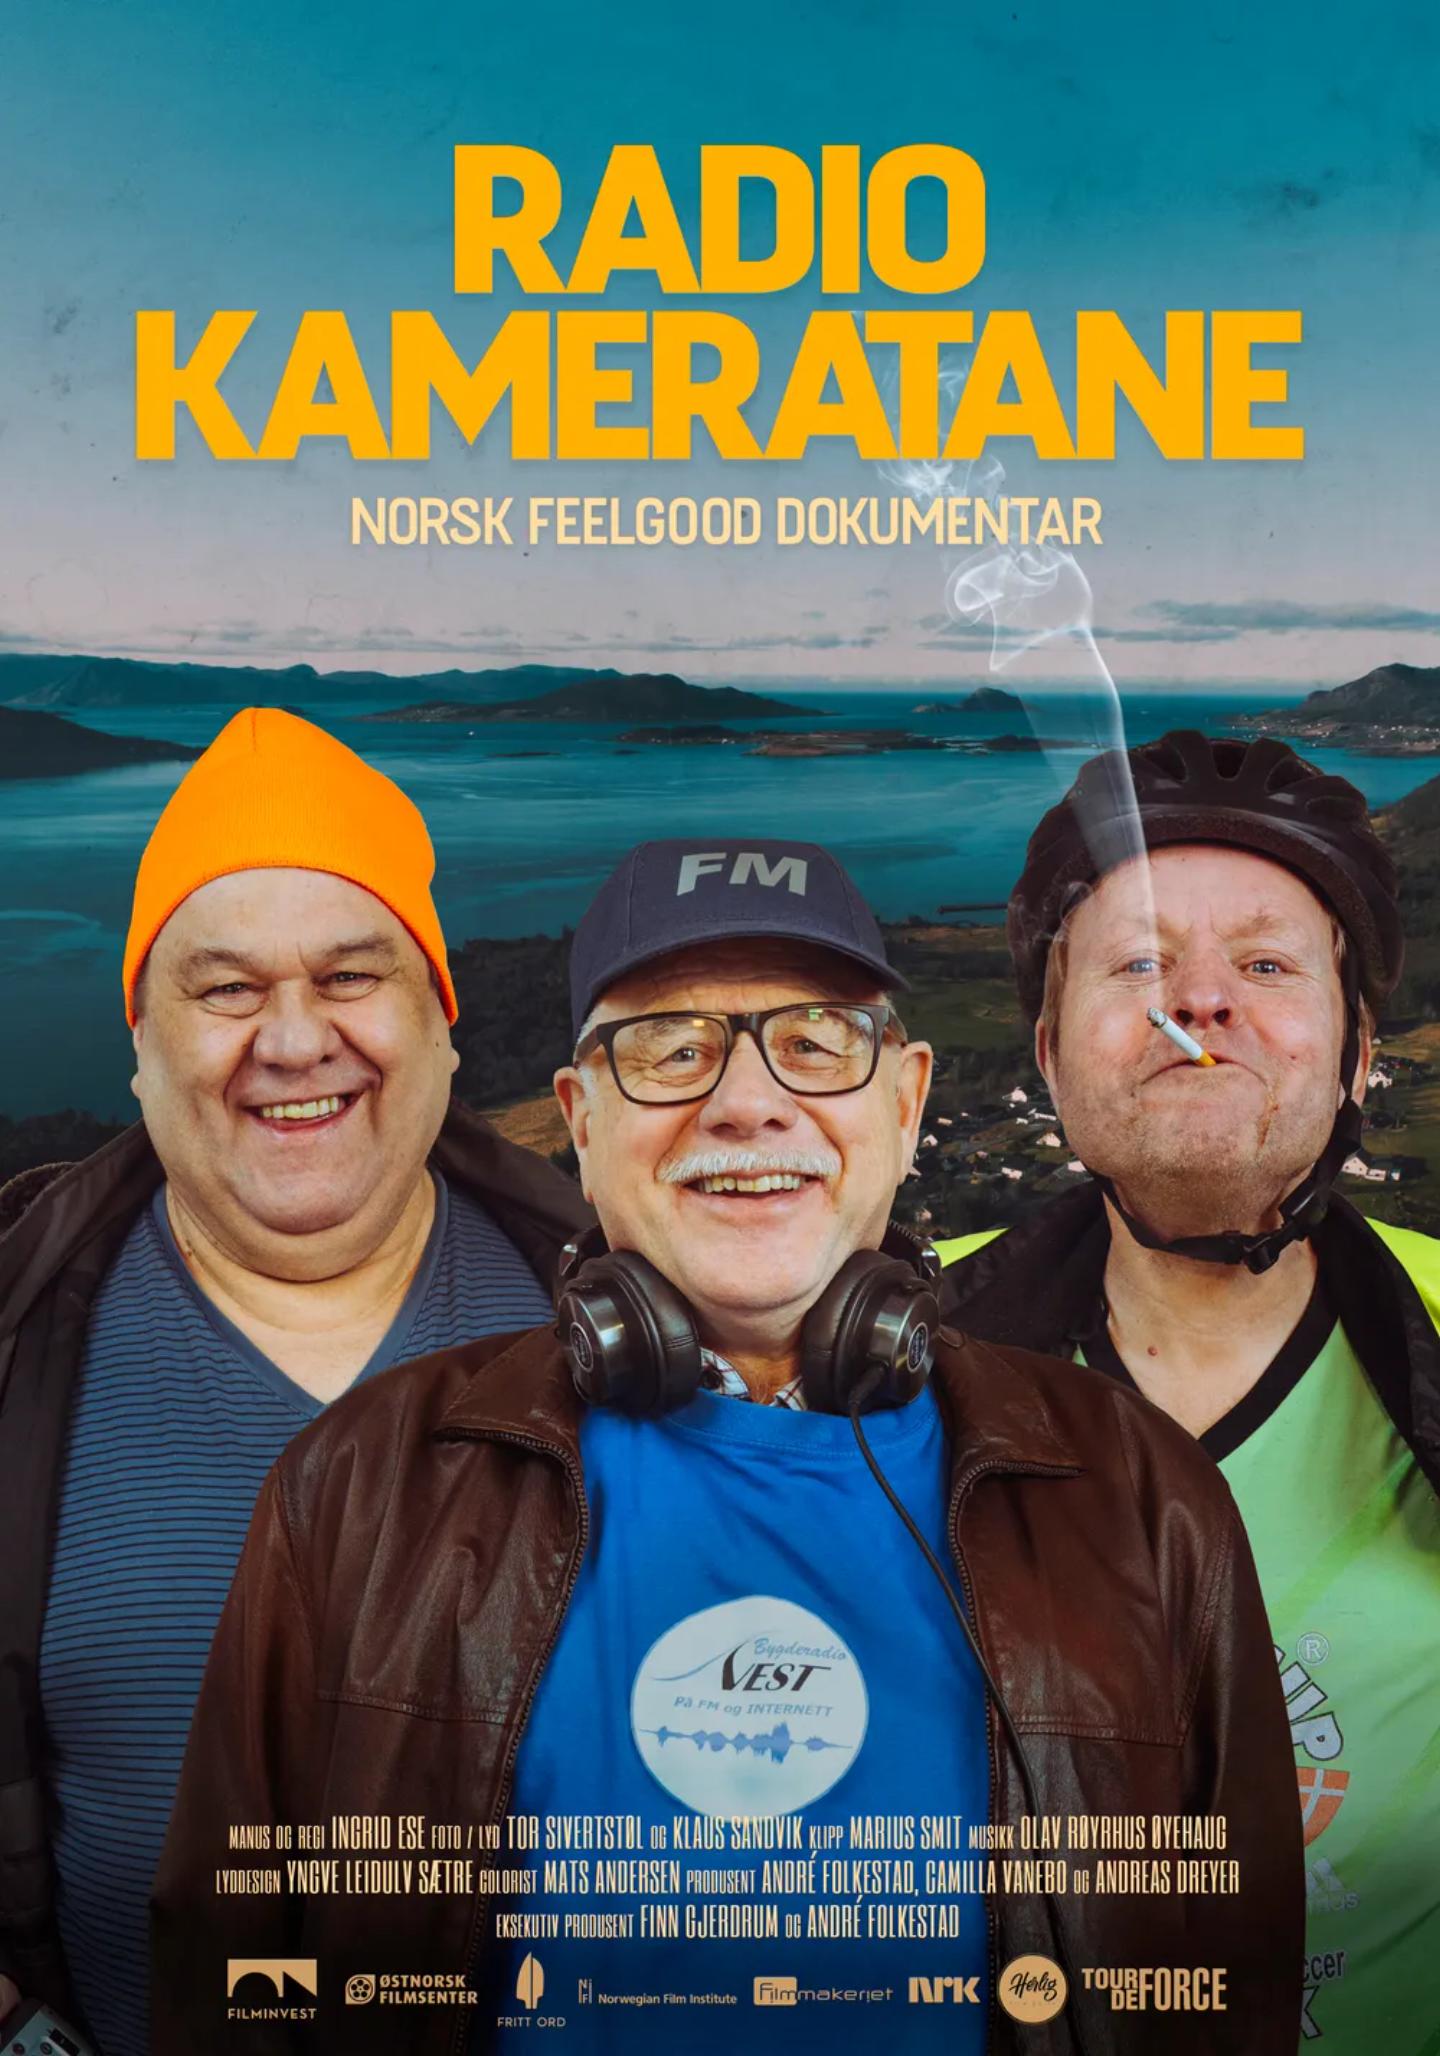 Plakat for 'Radiokameratane'